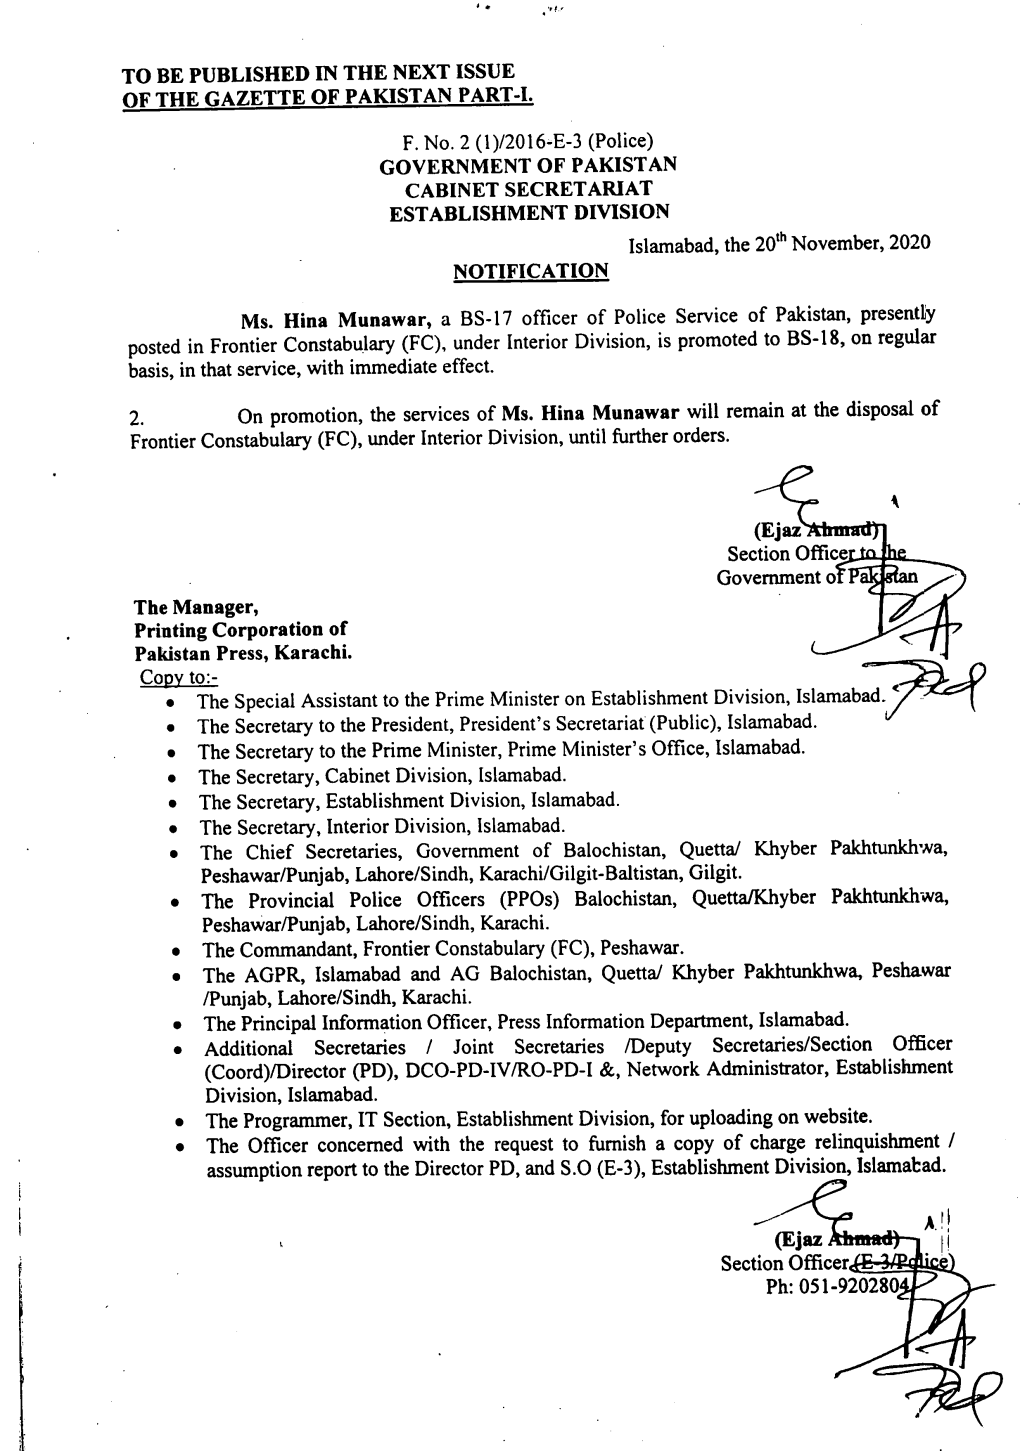 (Police) GOVERNMENT of PAKISTAN CABINET SECRETARIAT ESTABLISHMENT DIVISION 201H Islamabad, the November, 2020 NOTIFICATION